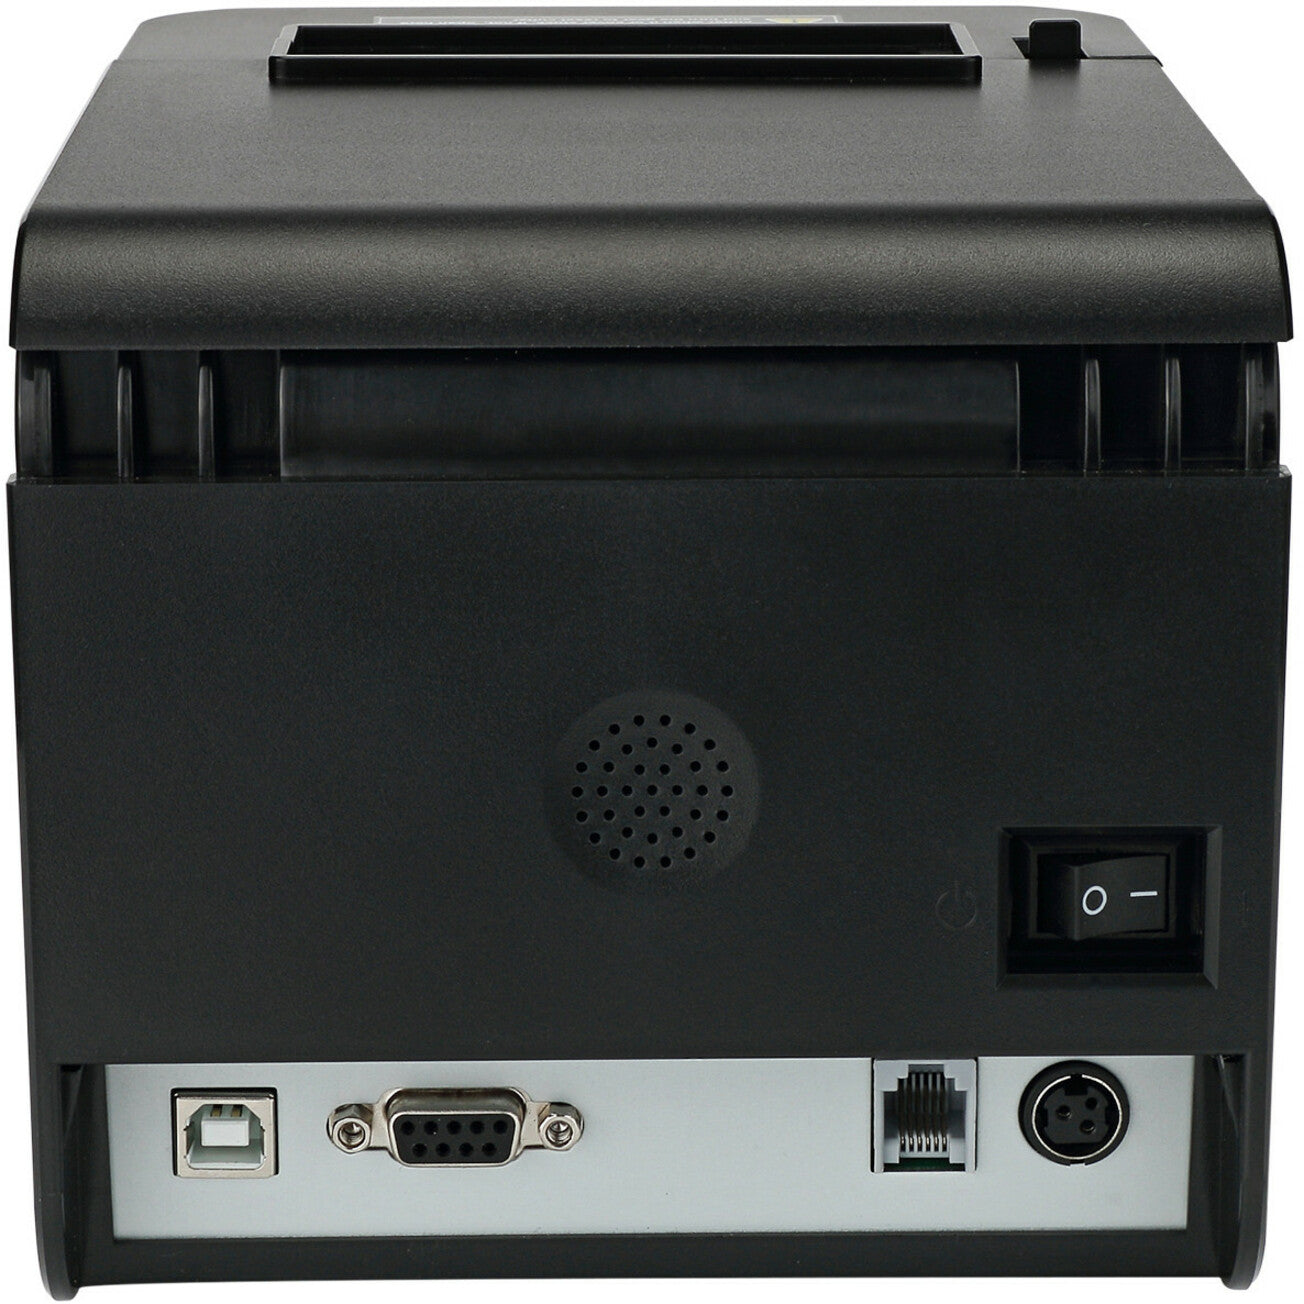 Adesso NUPRINT 310 NuPrint 3 Inch Thermal Receipt Printer, Monochrome, USB & Serial, 10.24 in/s